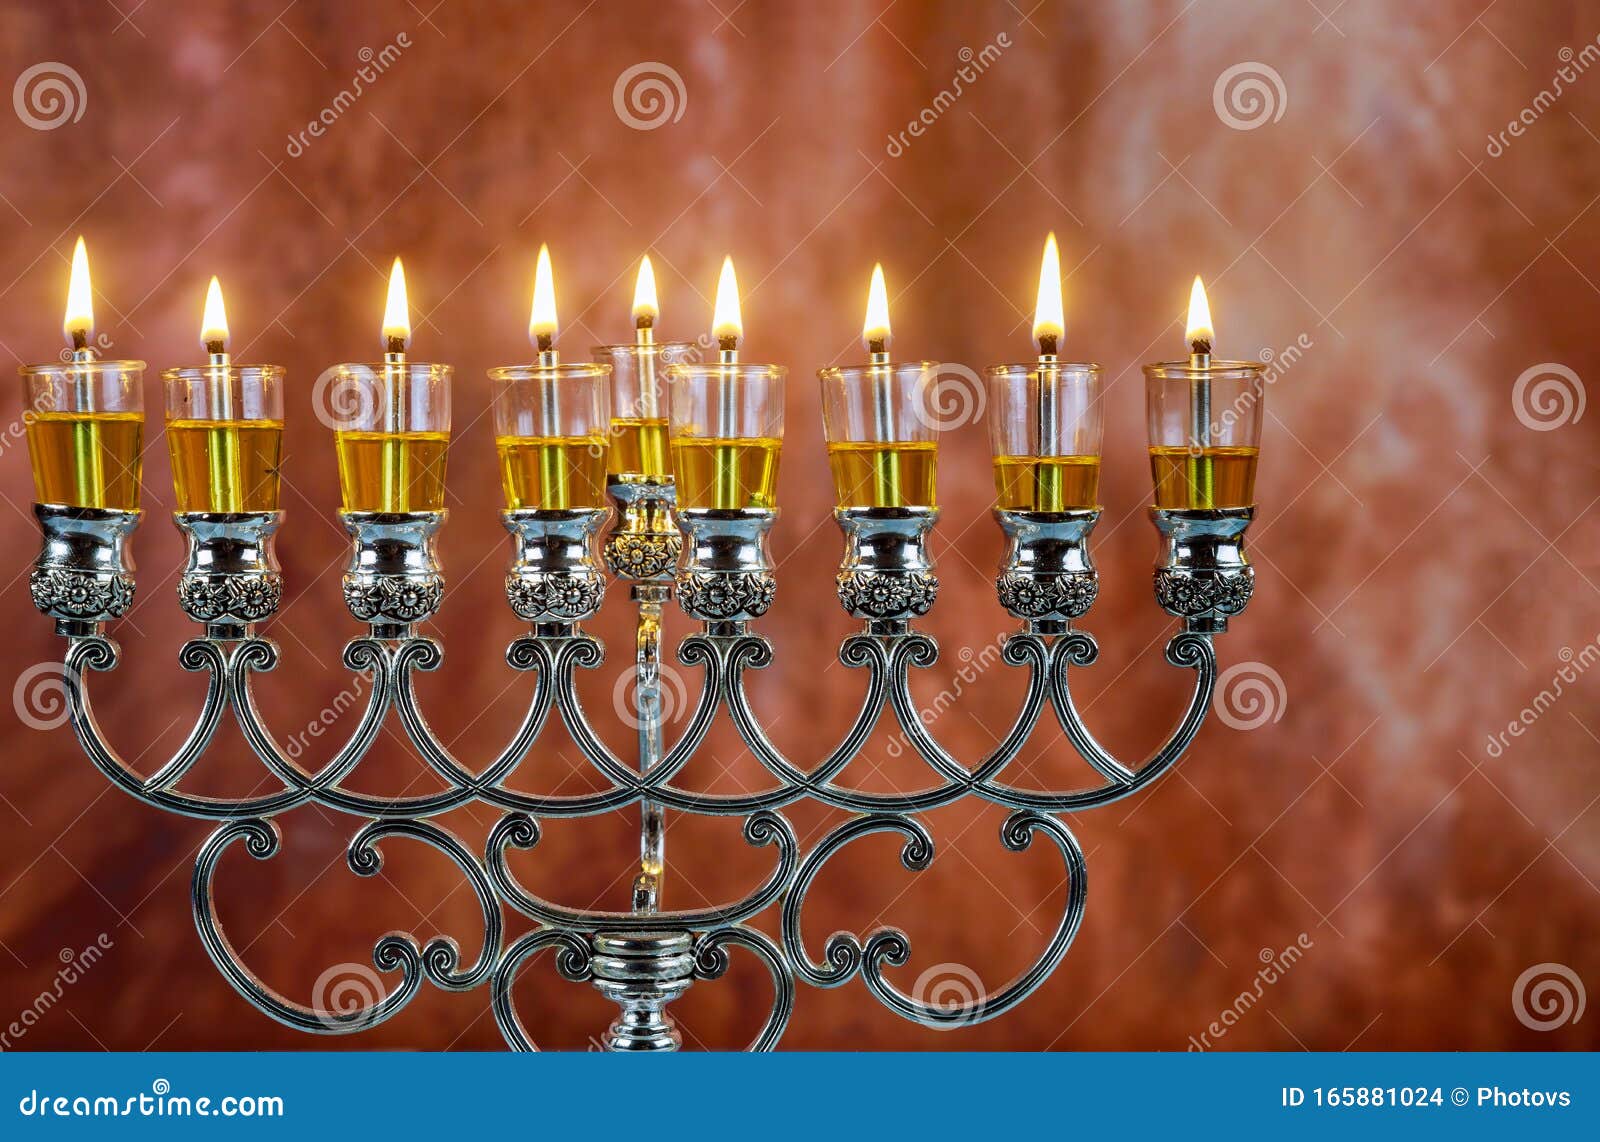 jewish holiday hanukkah with menorah traditional candelabra